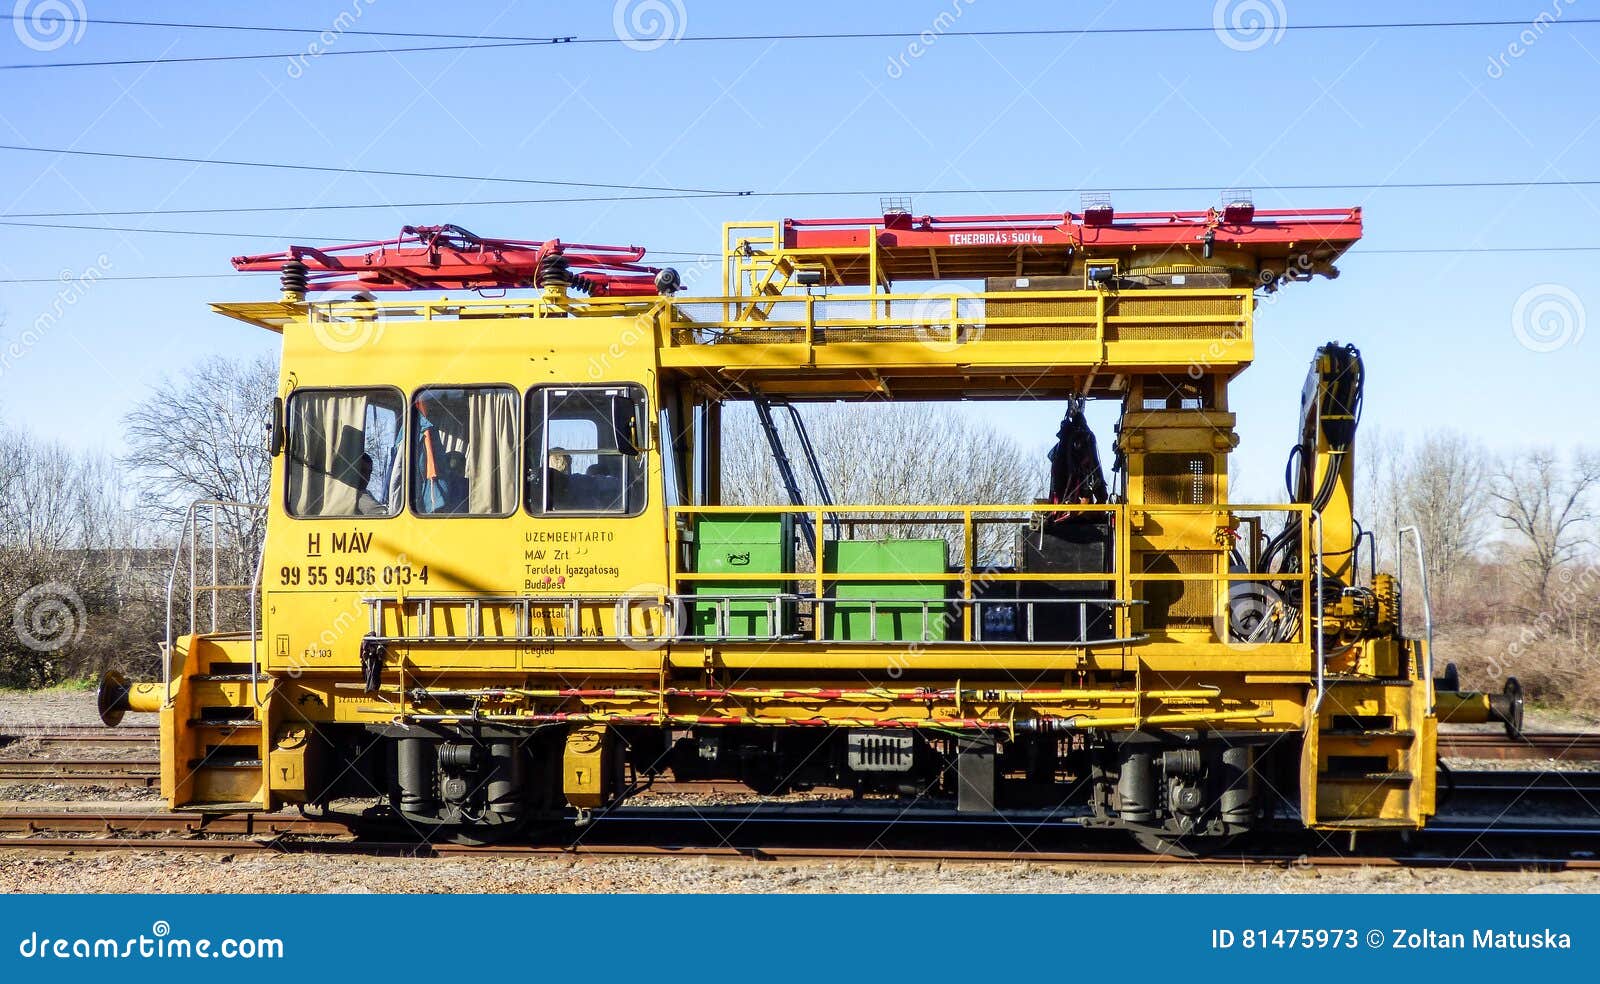 yellow locomotive train in hungary